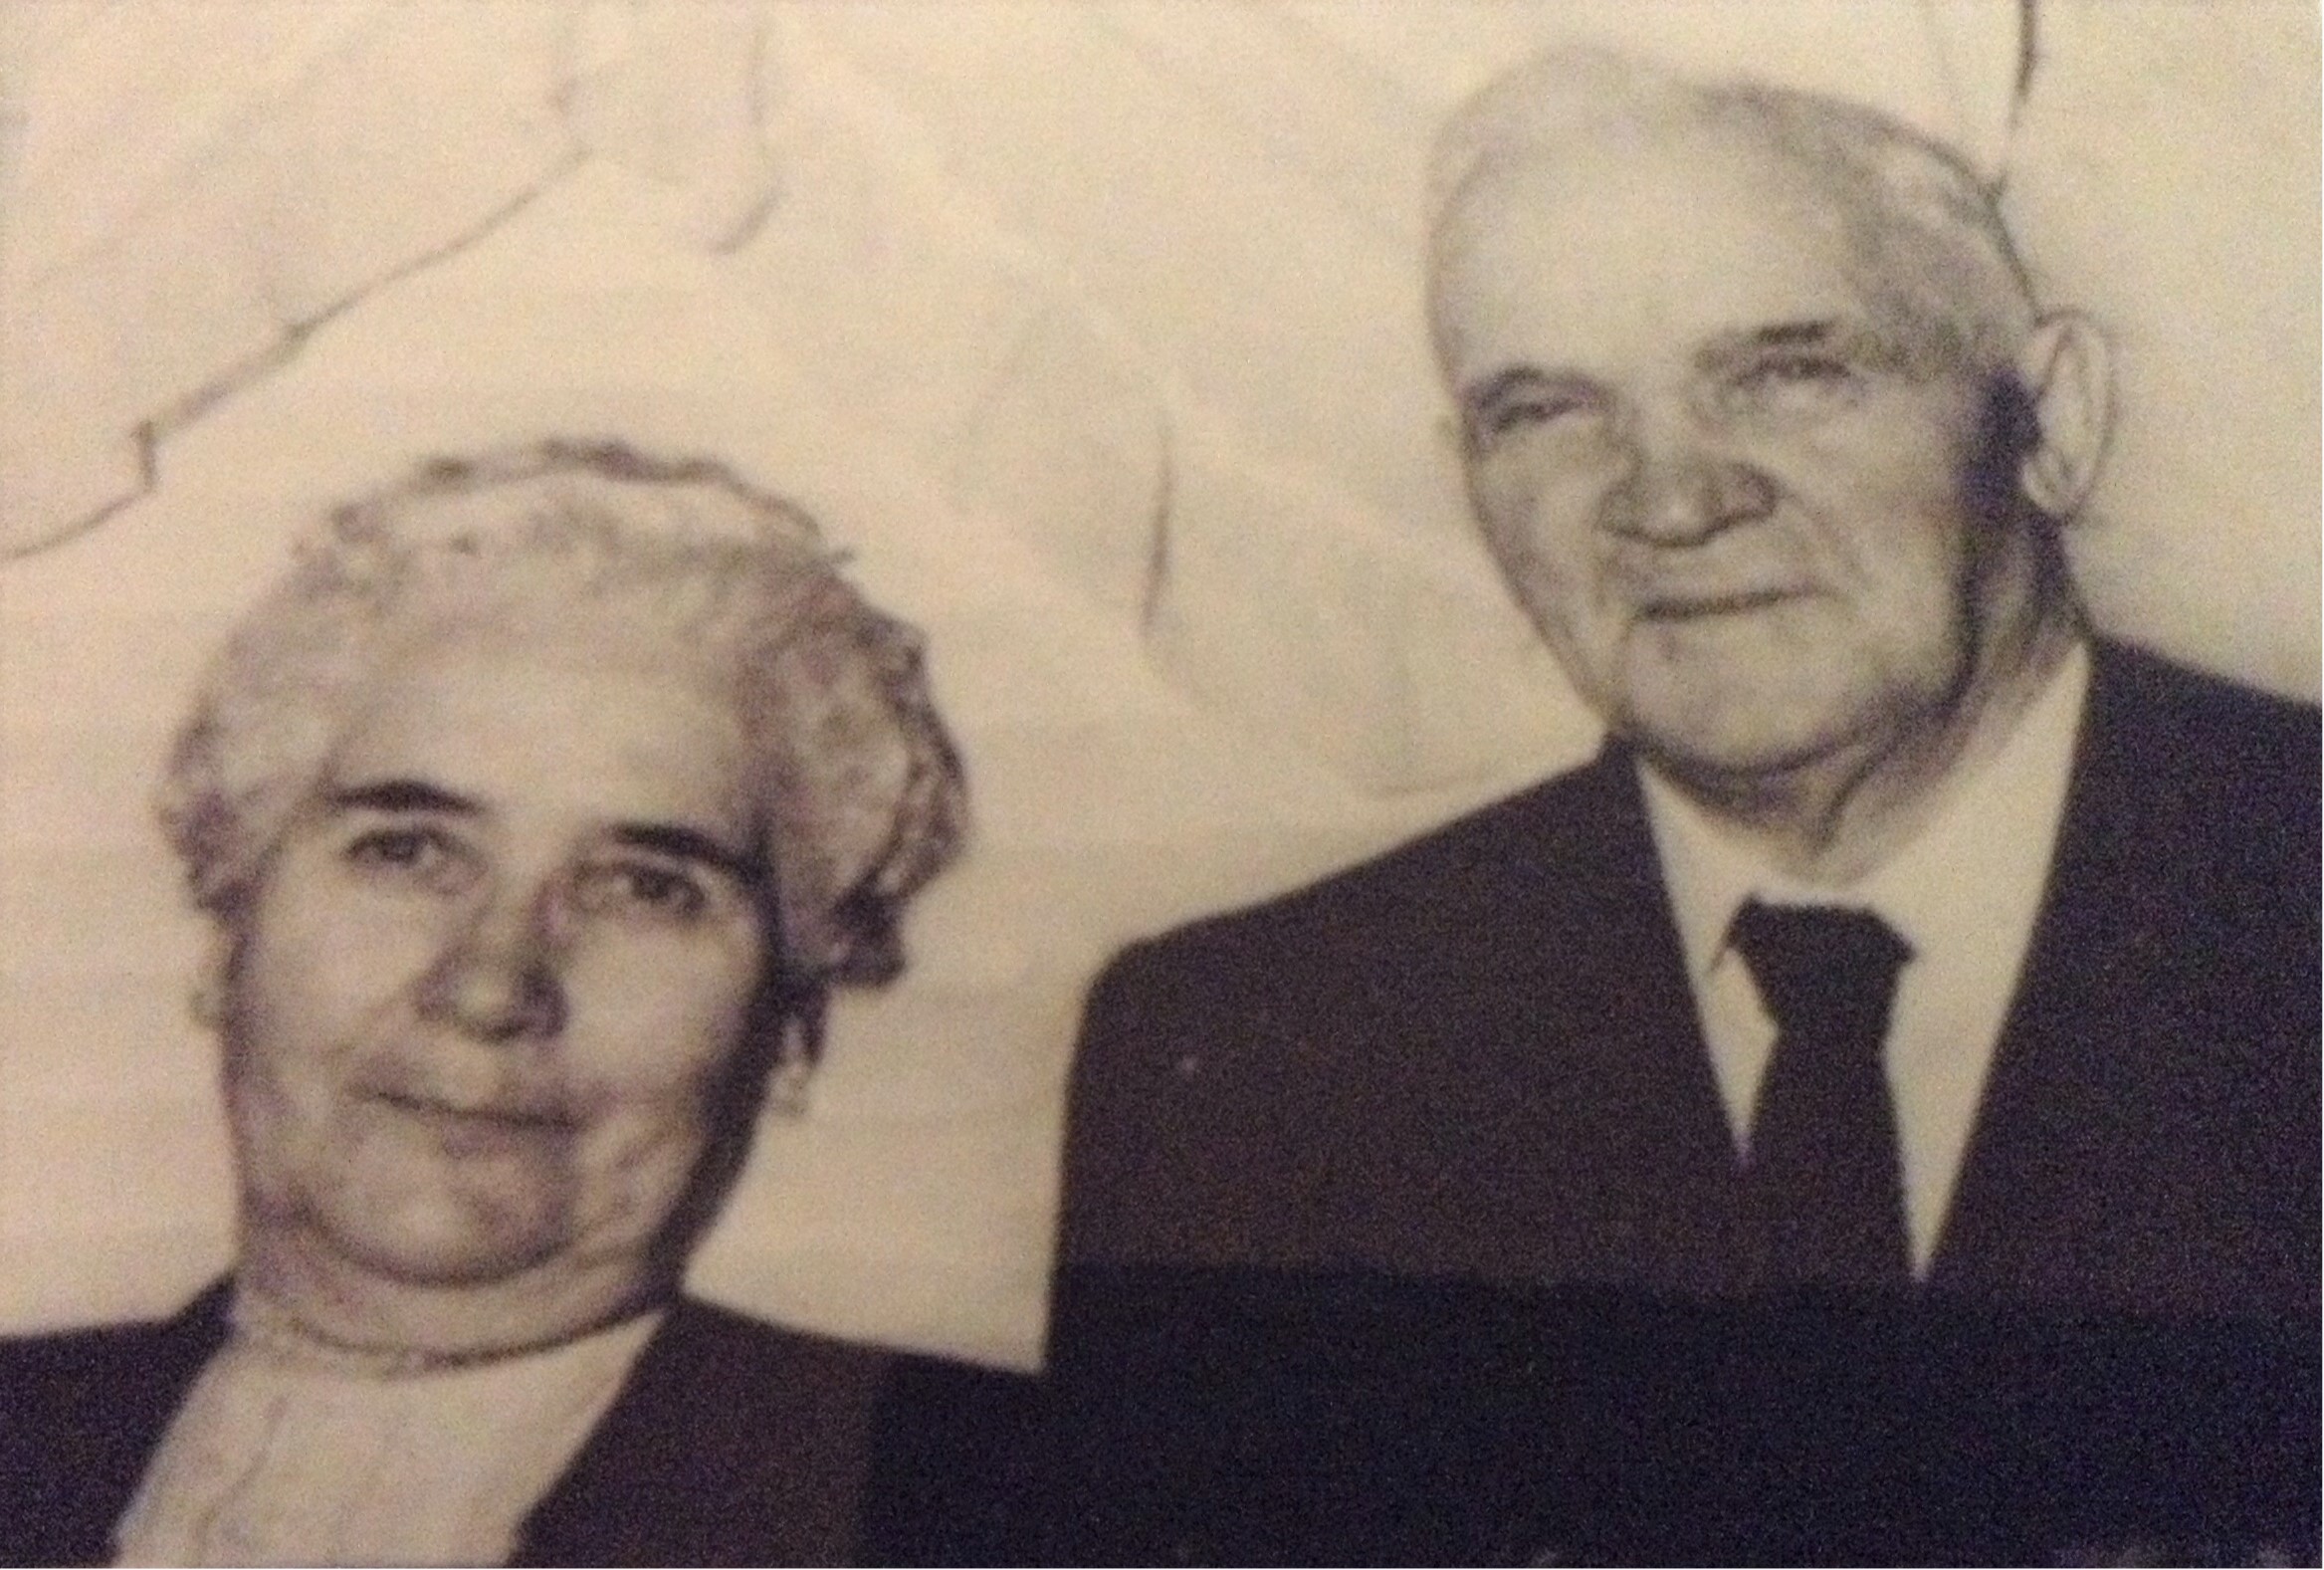 Mary Layman White & Roman Richard Seipert served together ca 1954-1956